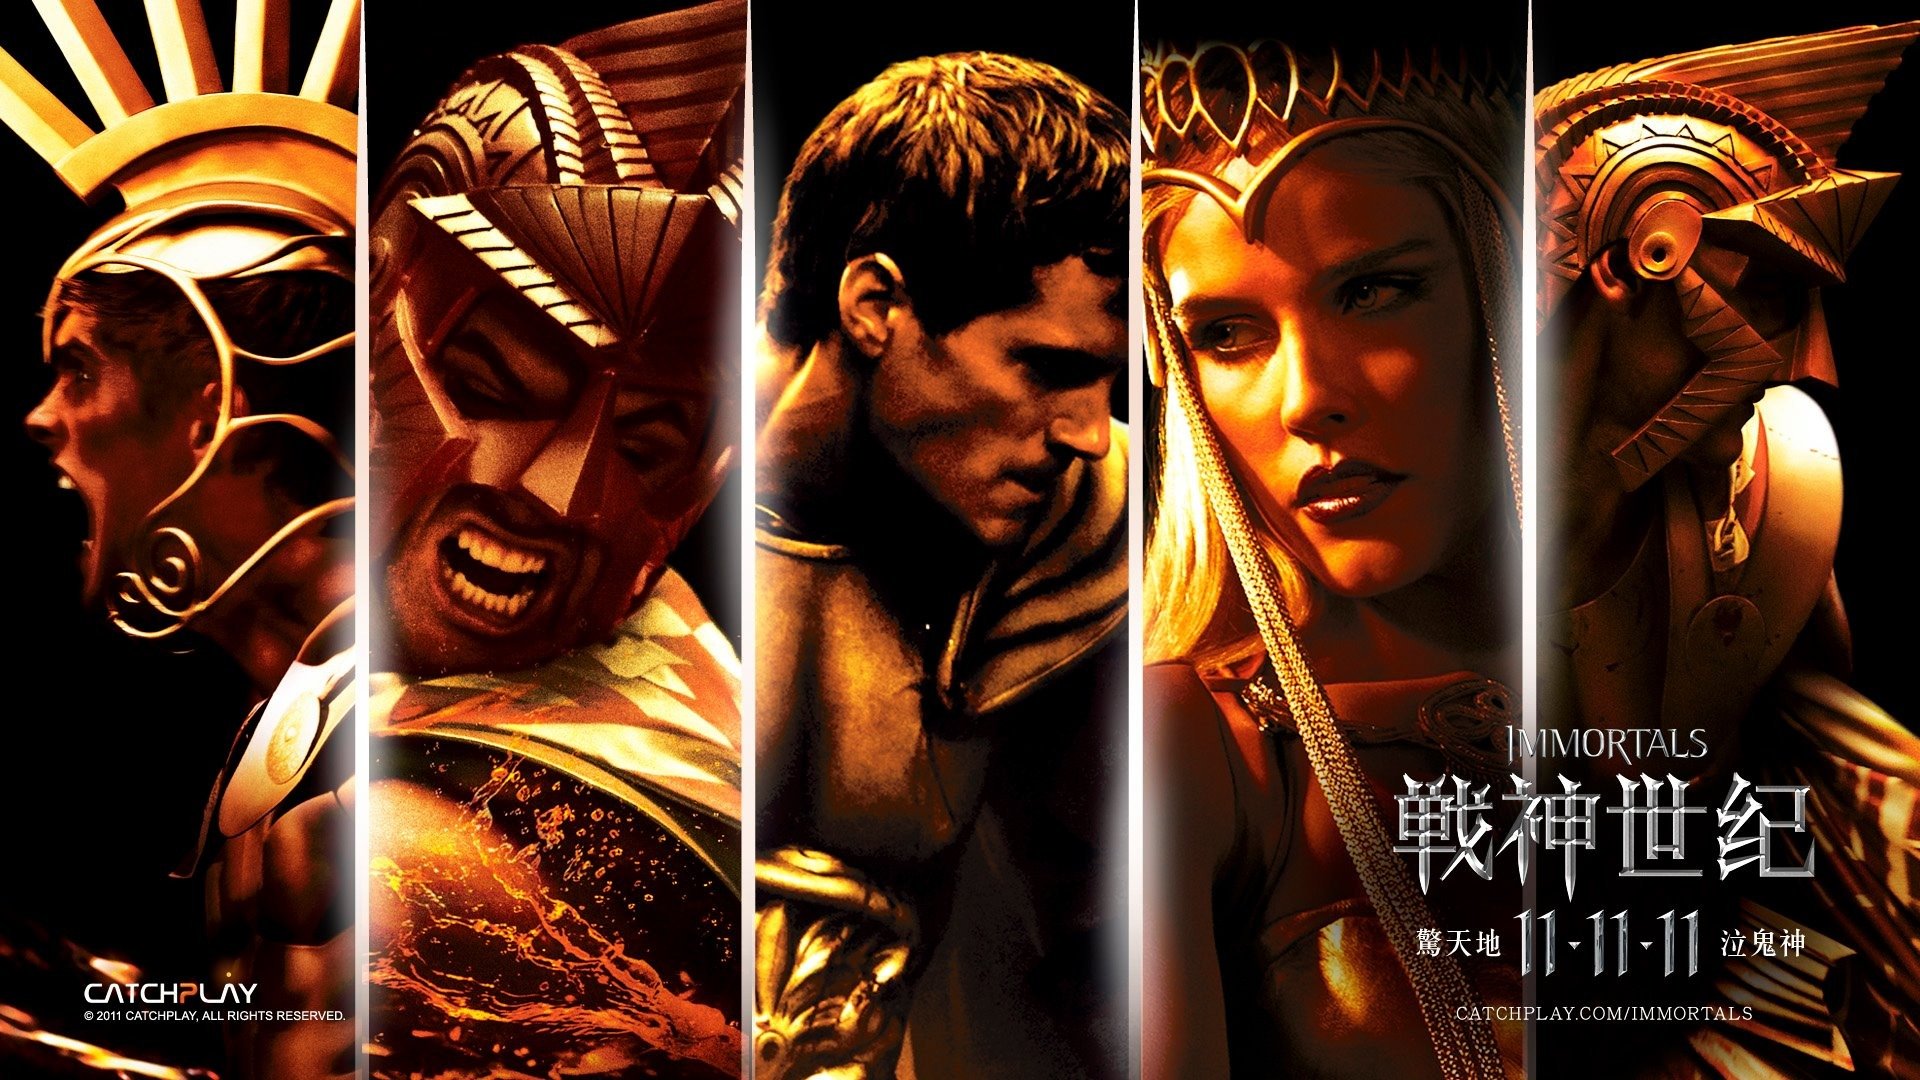 Immortals Fantasy Action Adventure Movie Film Warrior Poster Wallpaper